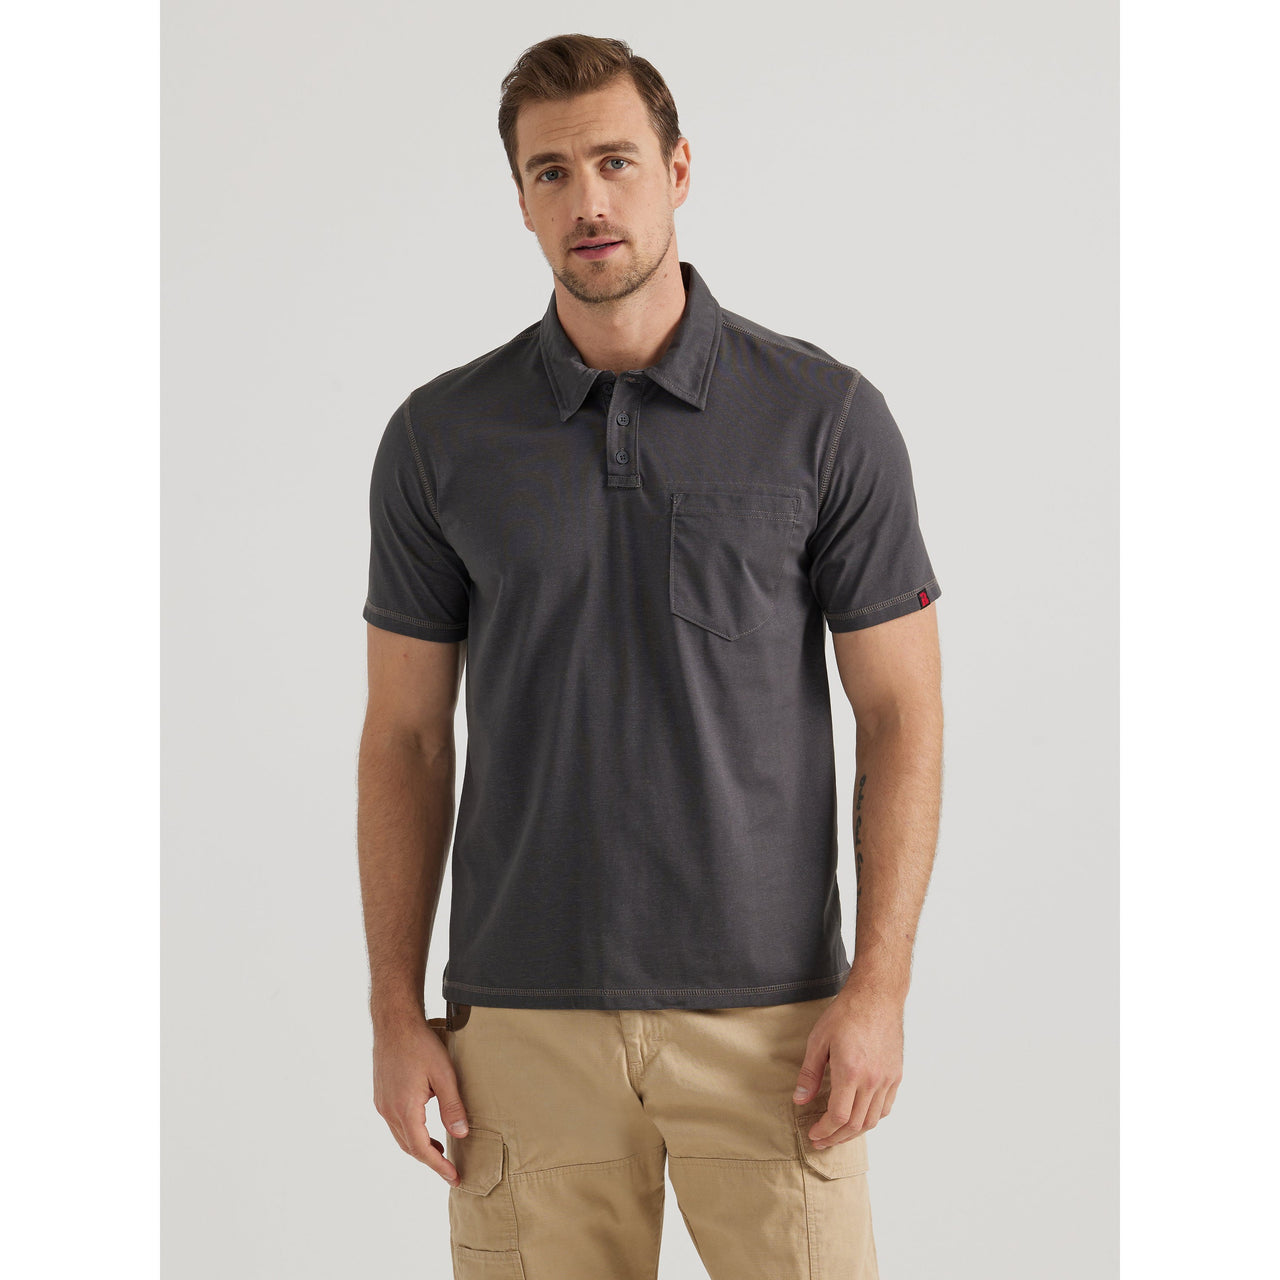 Wrangler Men's Riggs Performance Knit Short Sleeve Polo Shirt - Grey